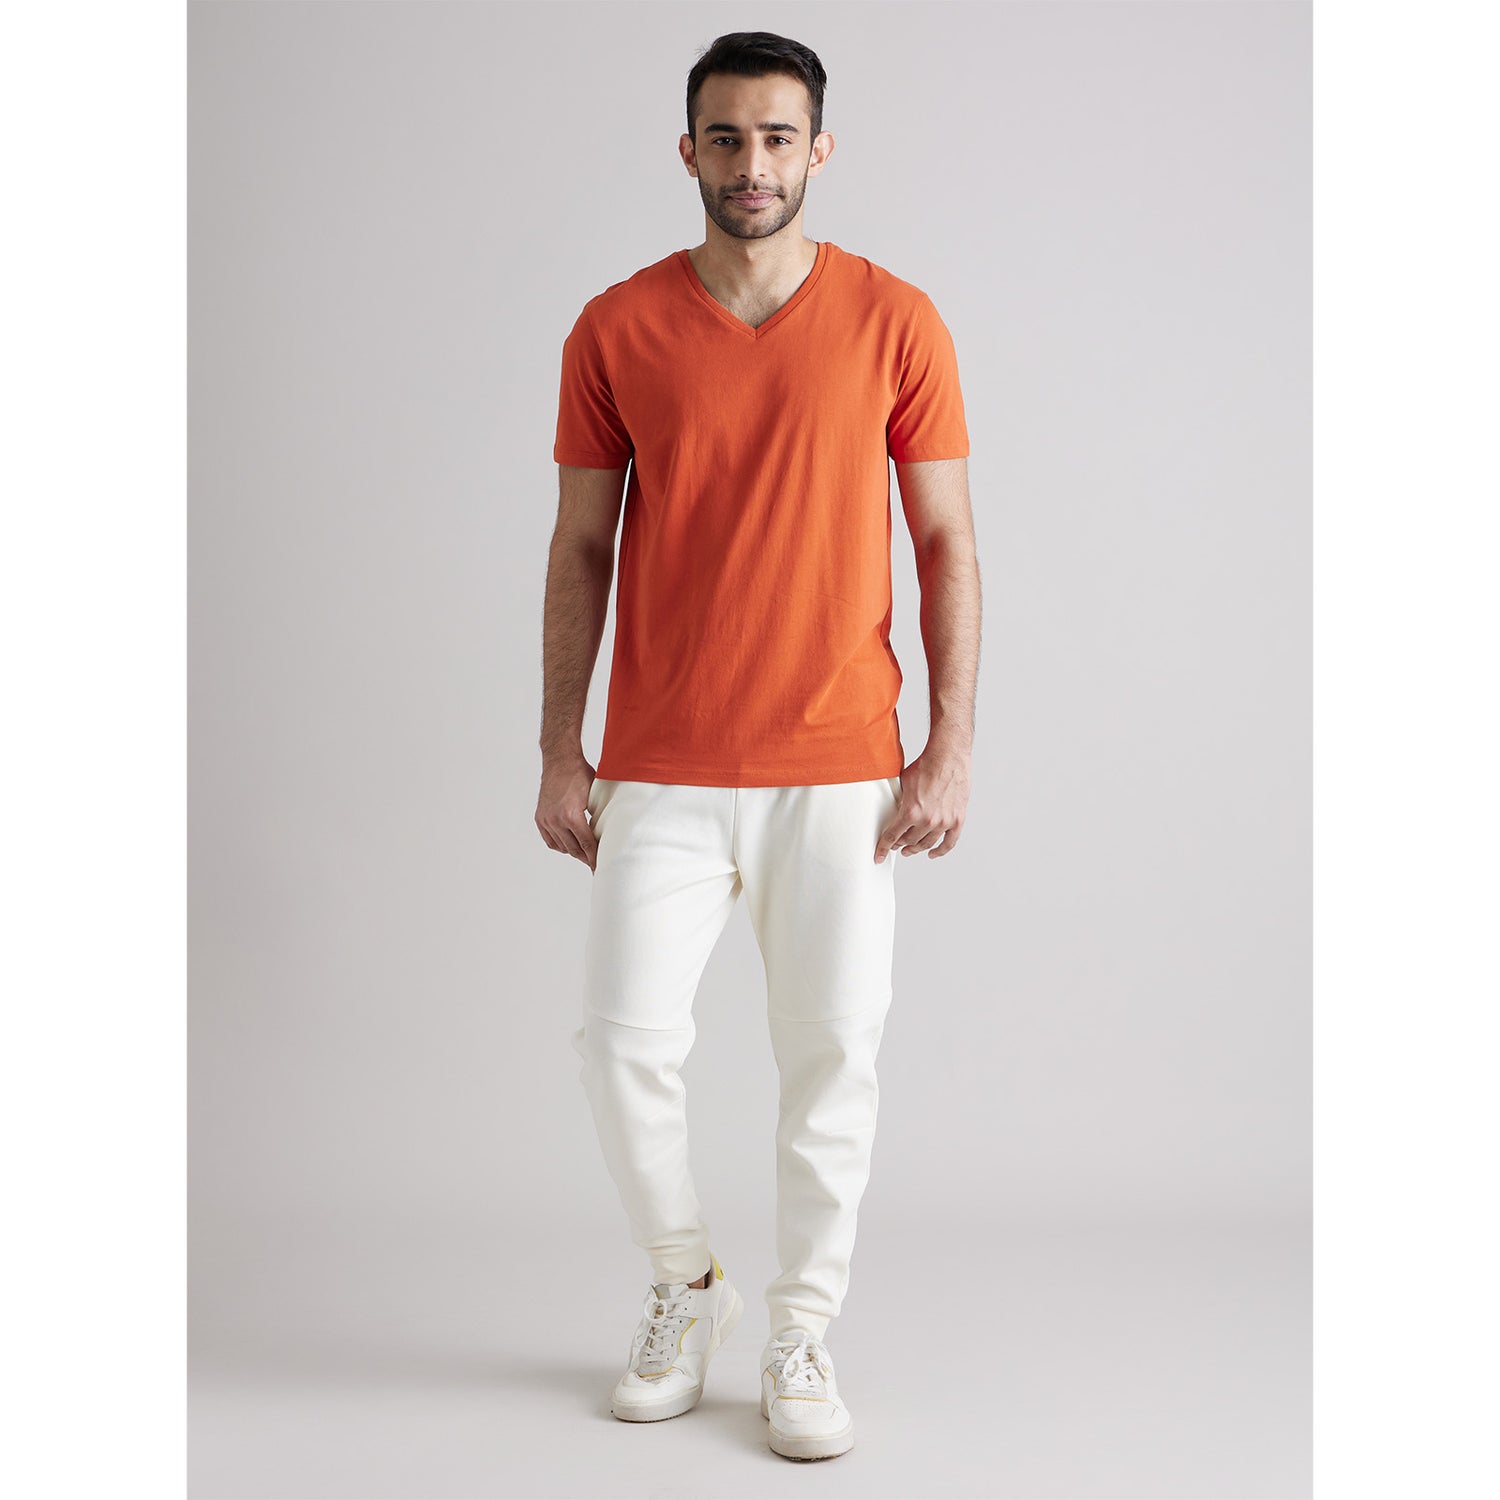 Brown V-Neck Short Sleeves Cotton T-shirt (NEUNIV)